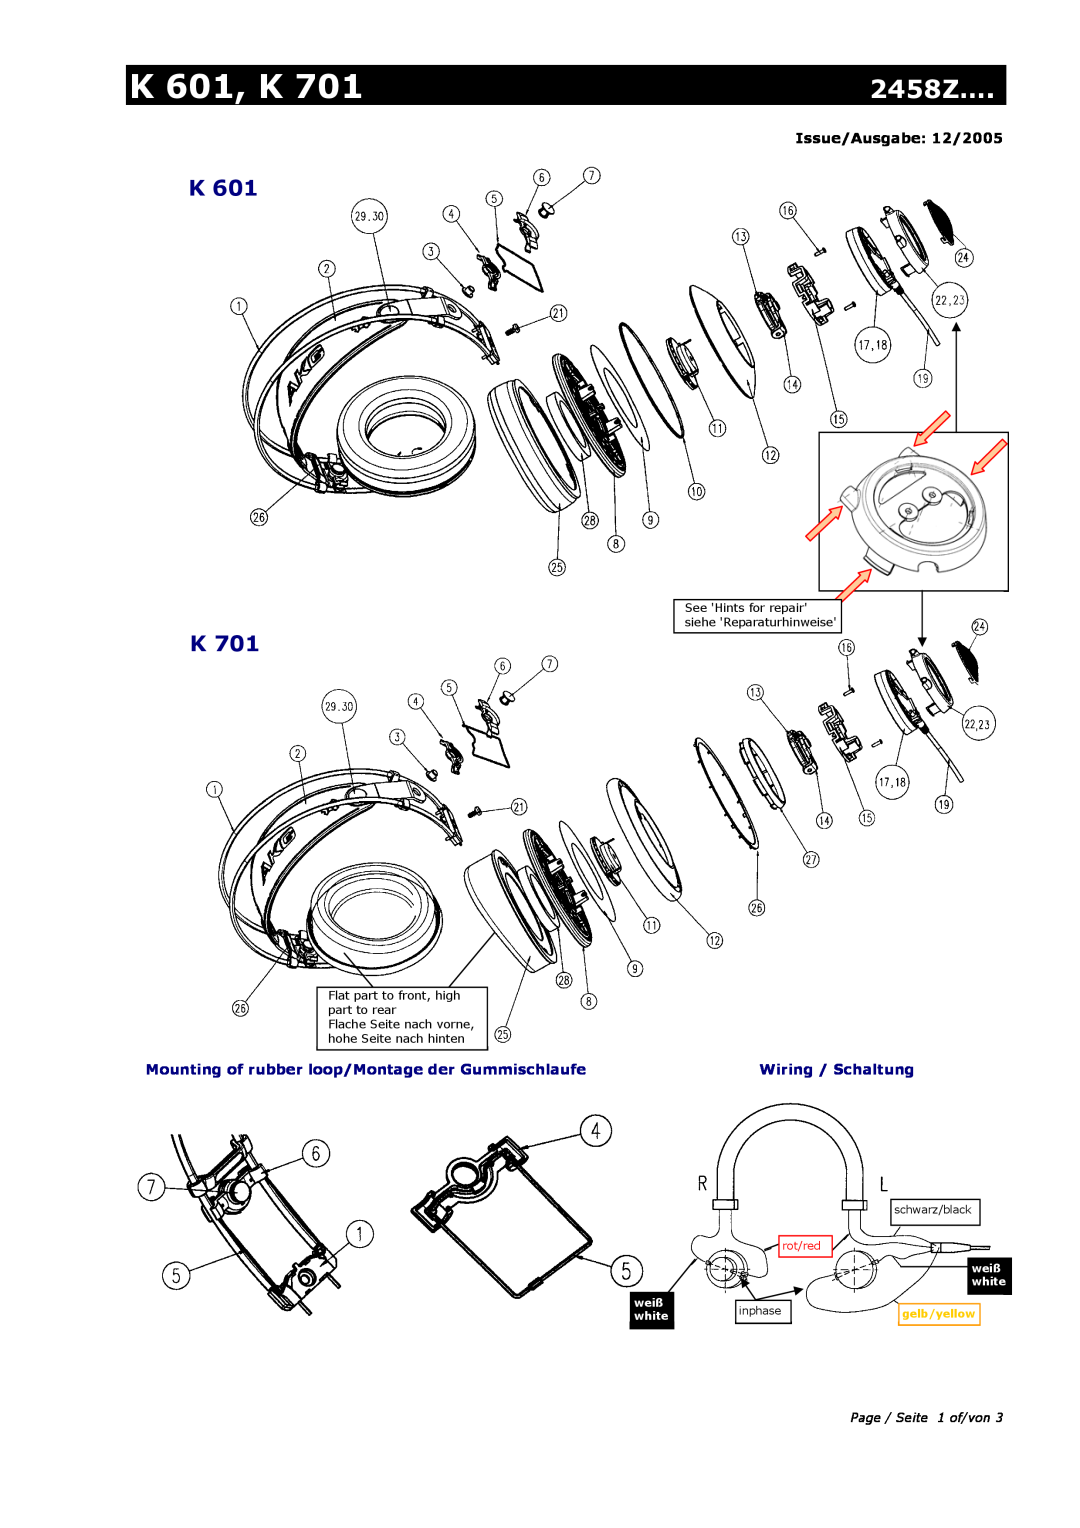 AKG Acoustics K 701 manual K 601, K, 2458Z…, Mounting of rubber loop/Montage der Gummischlaufe, Issue/Ausgabe 12/2005 